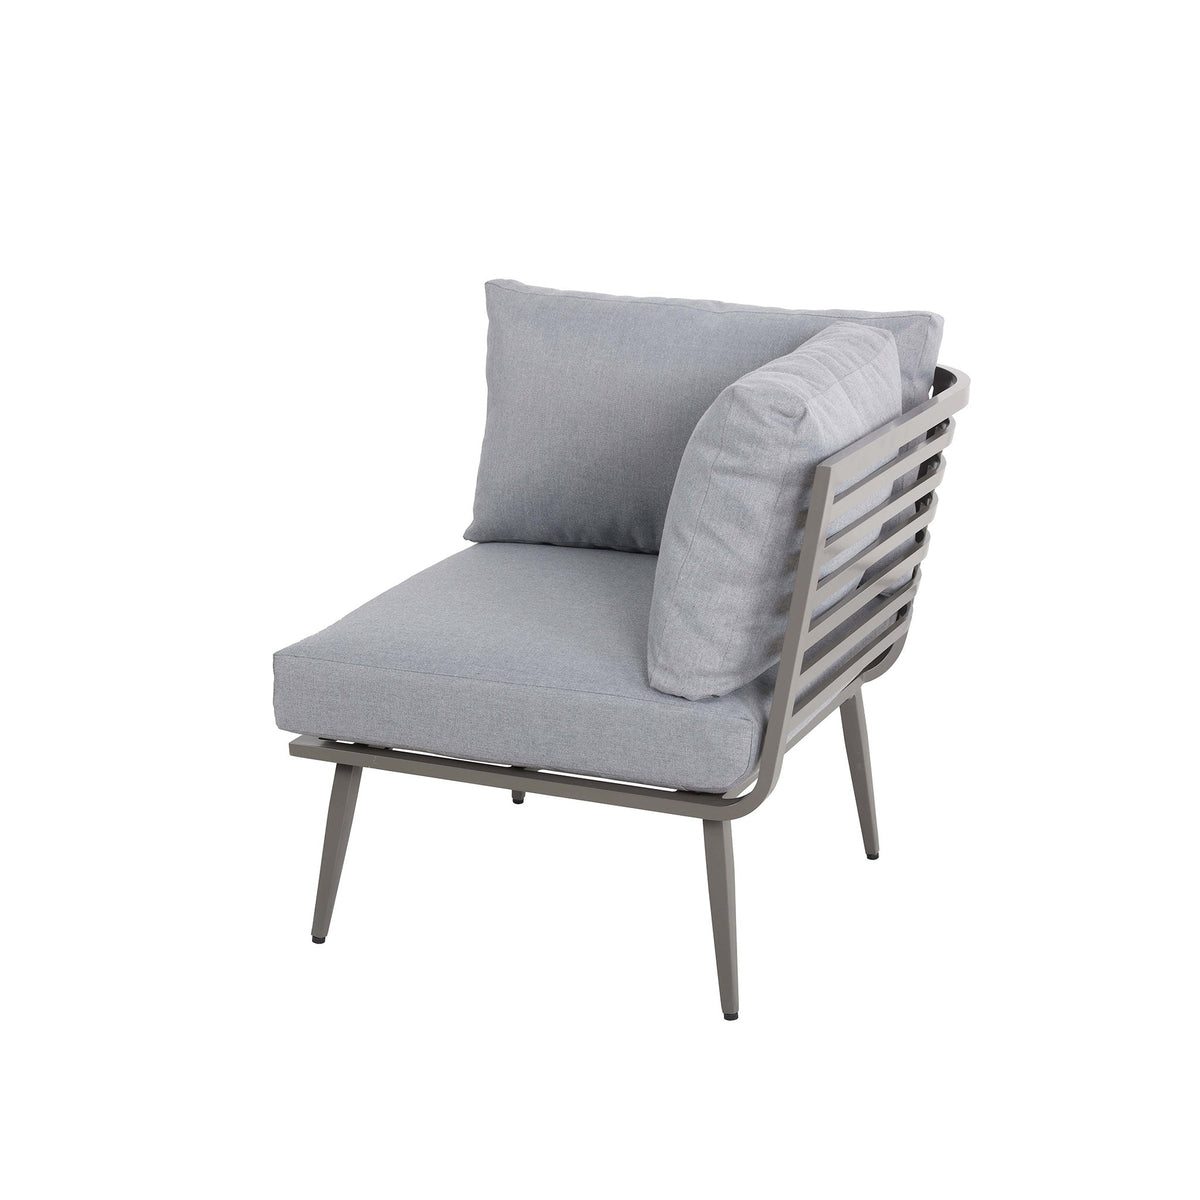 Mayfair 120cm Grey Outdoor Corner Fire Pit Table Lounge Set Corner Sofa Seat